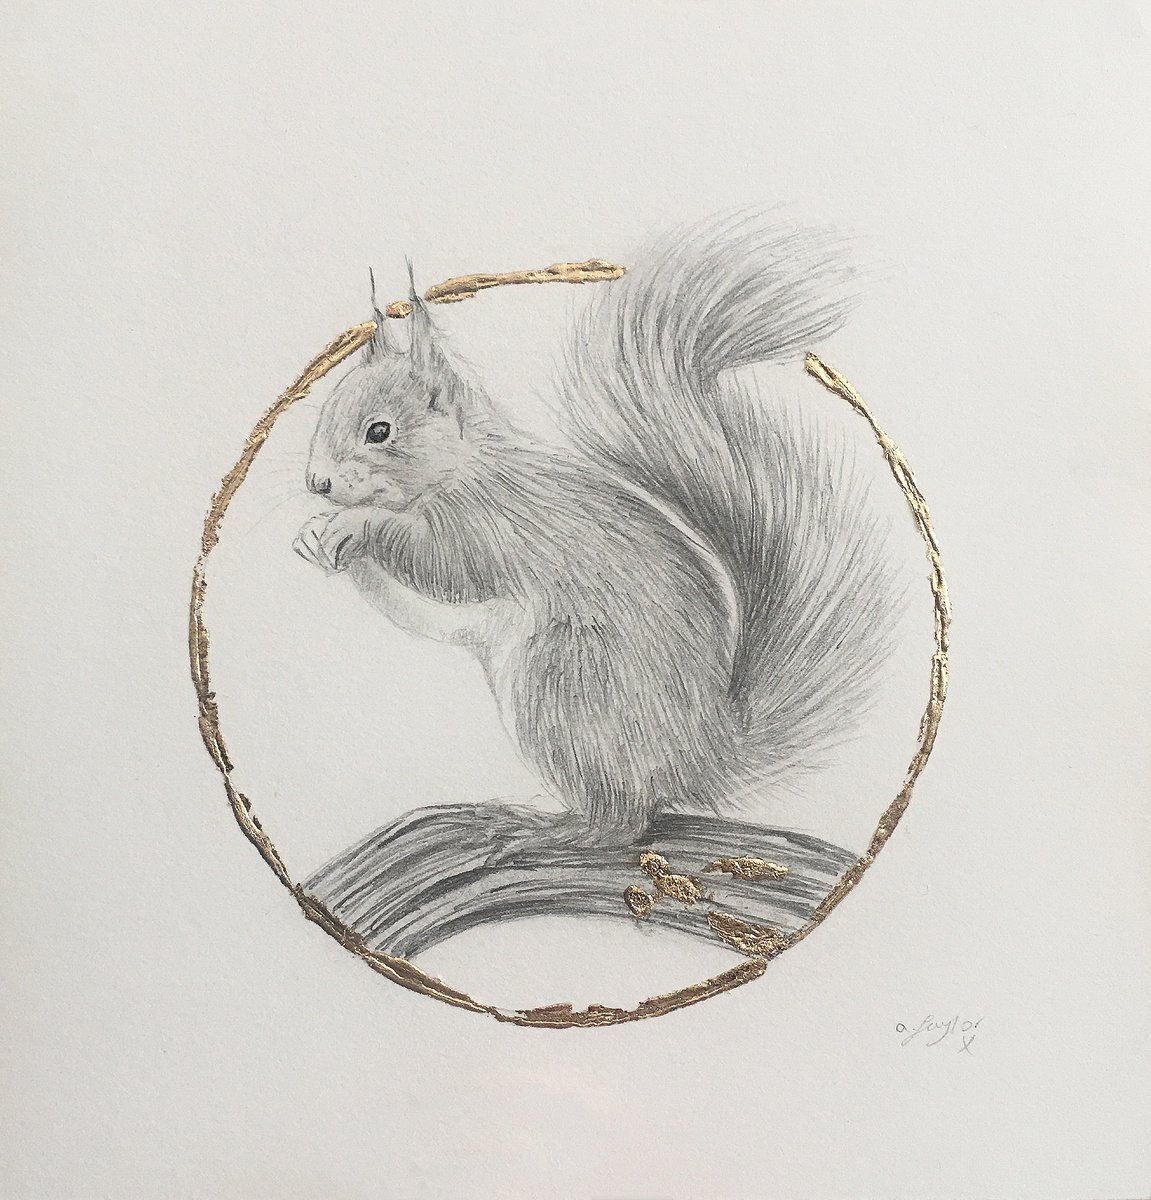 Squirrel drawing by Amelia Taylor